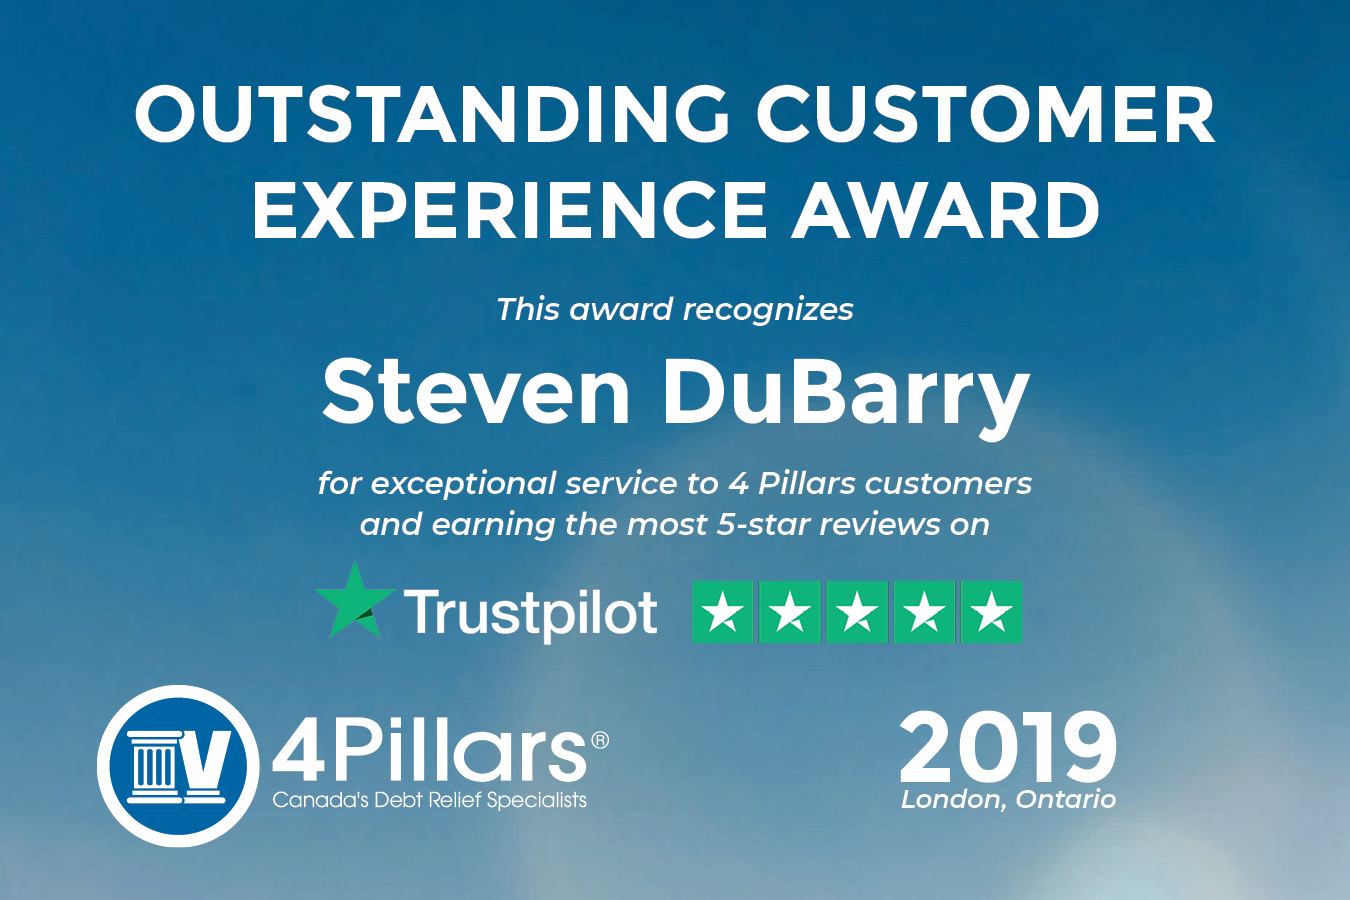 Trustpilot Customer Service Award 2019 for Steve DuBarry